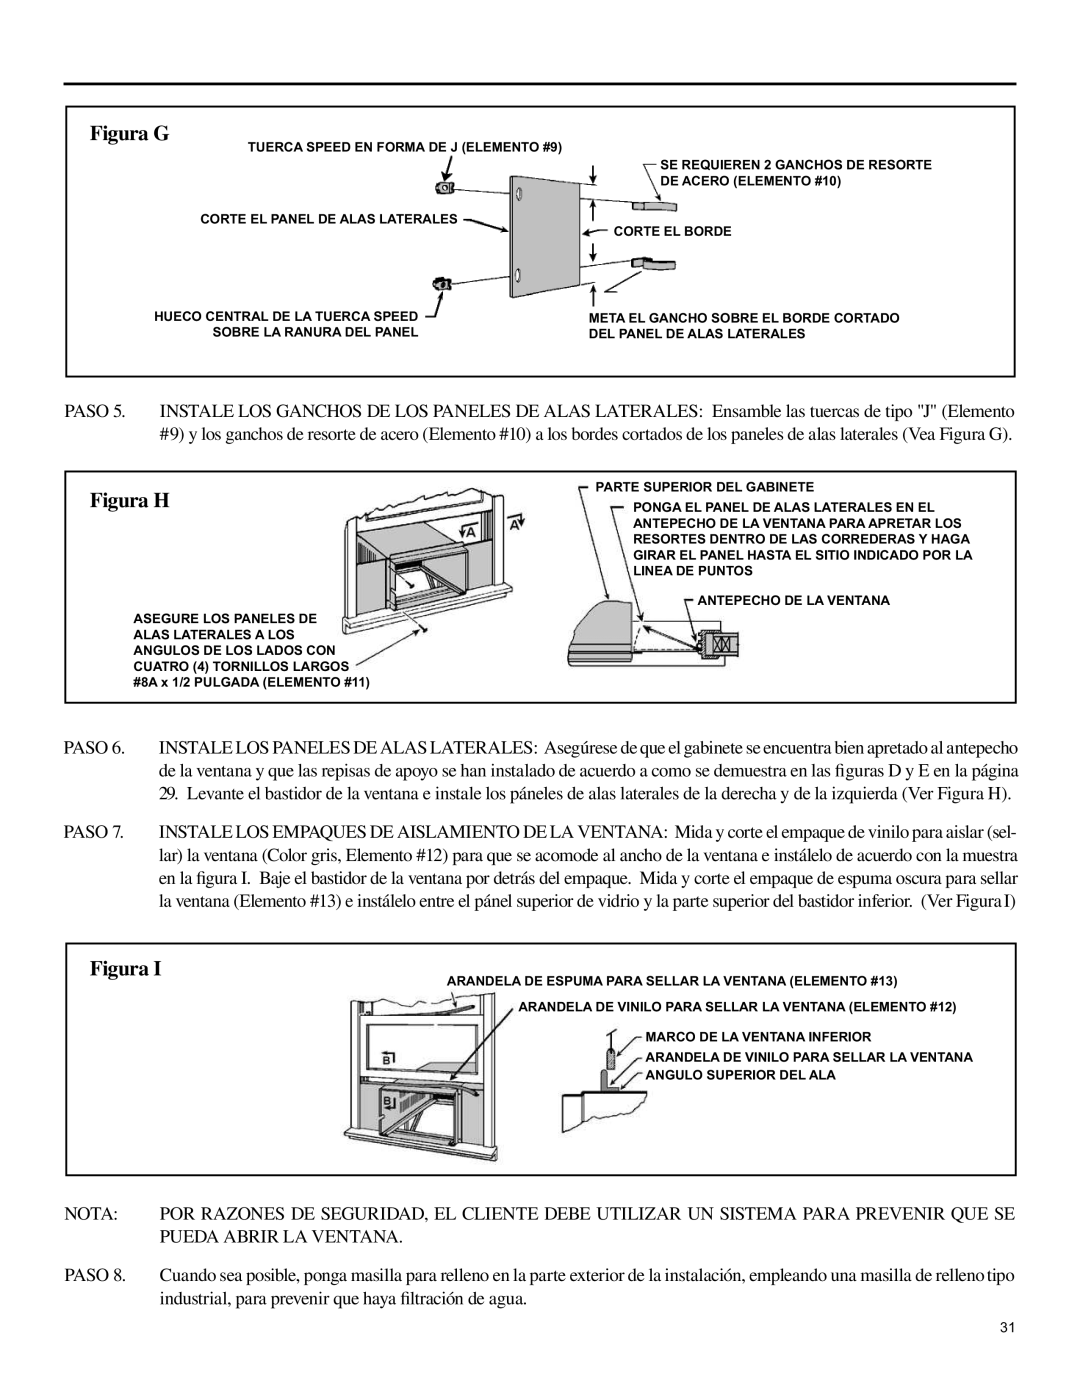 Friedrich SH15 operation manual Nota, Pueda Abrir La Ventana, Paso, Figura G, Figura H 